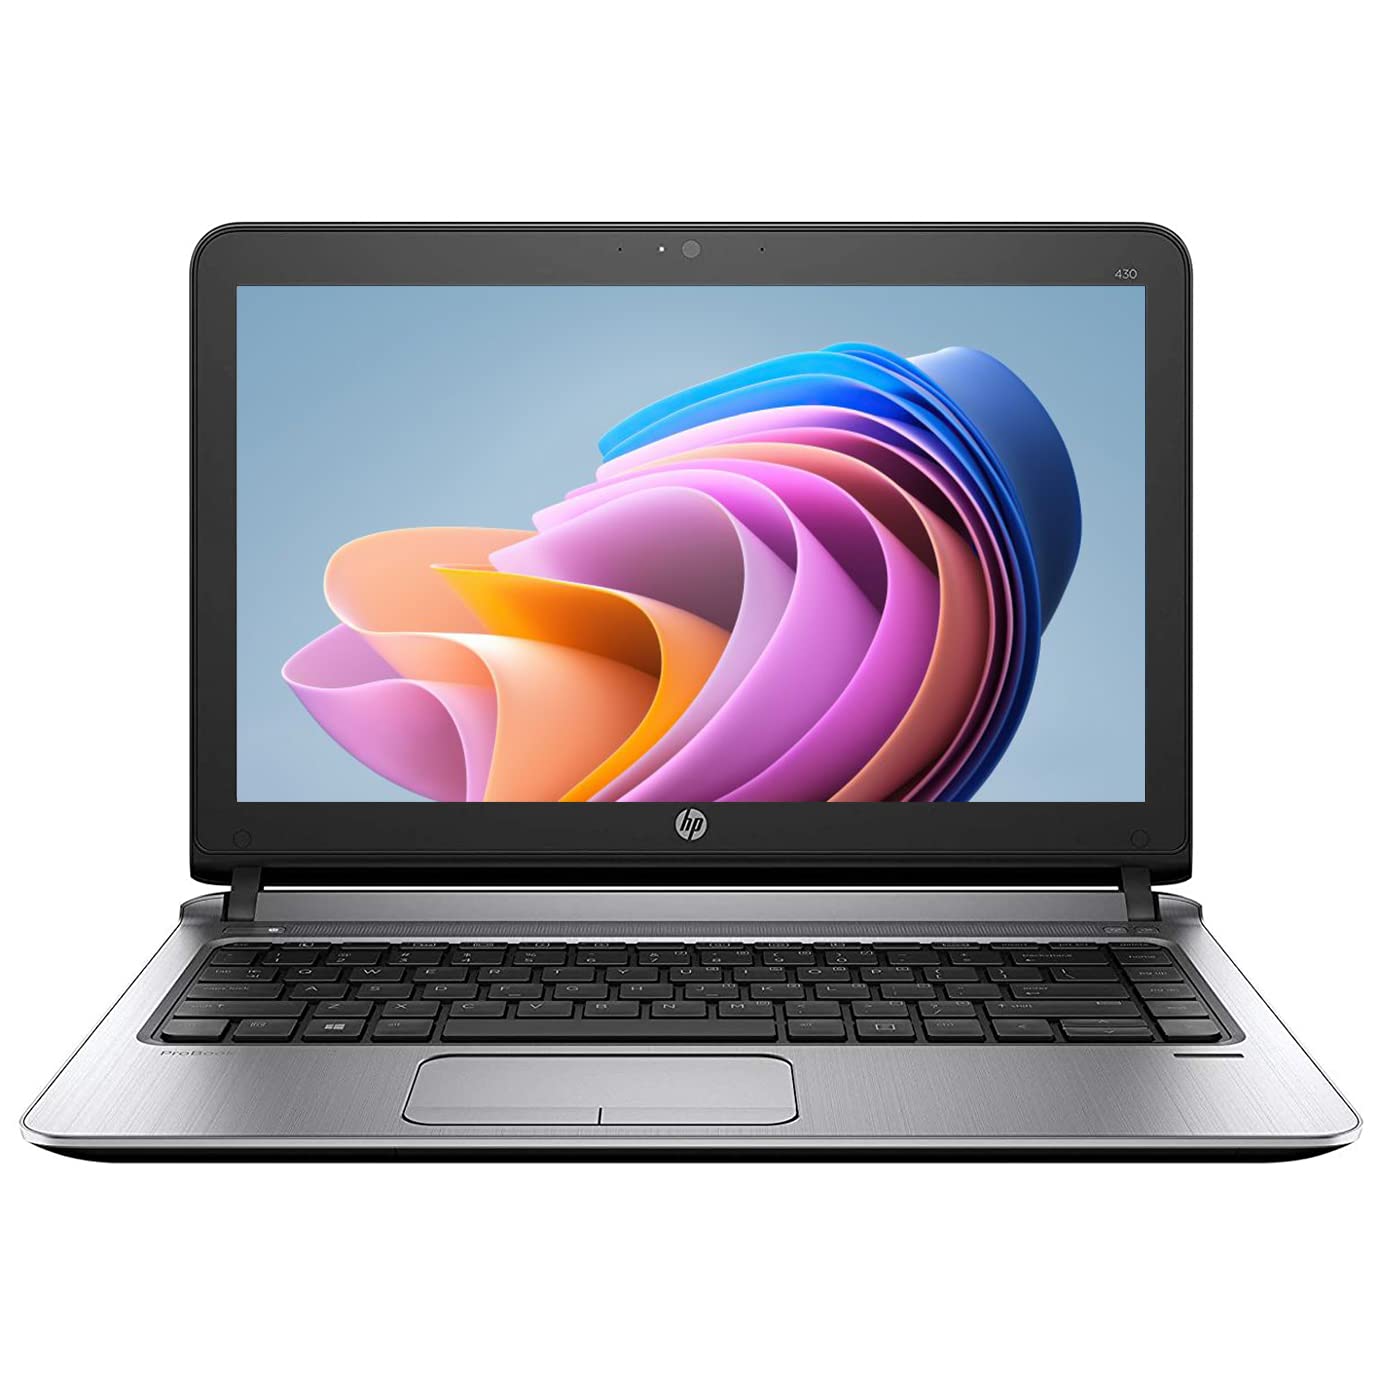 HP ProBook 430 G3 DDR3 Notebook ile Uyumlu SSD / HDD Kutusu Listesi - HP  ProBook 430 G3 DDR3 Notebook Uyumlu SSD HDD Kutusu / Bilendenal.com Doğru  ürünü bilendenal